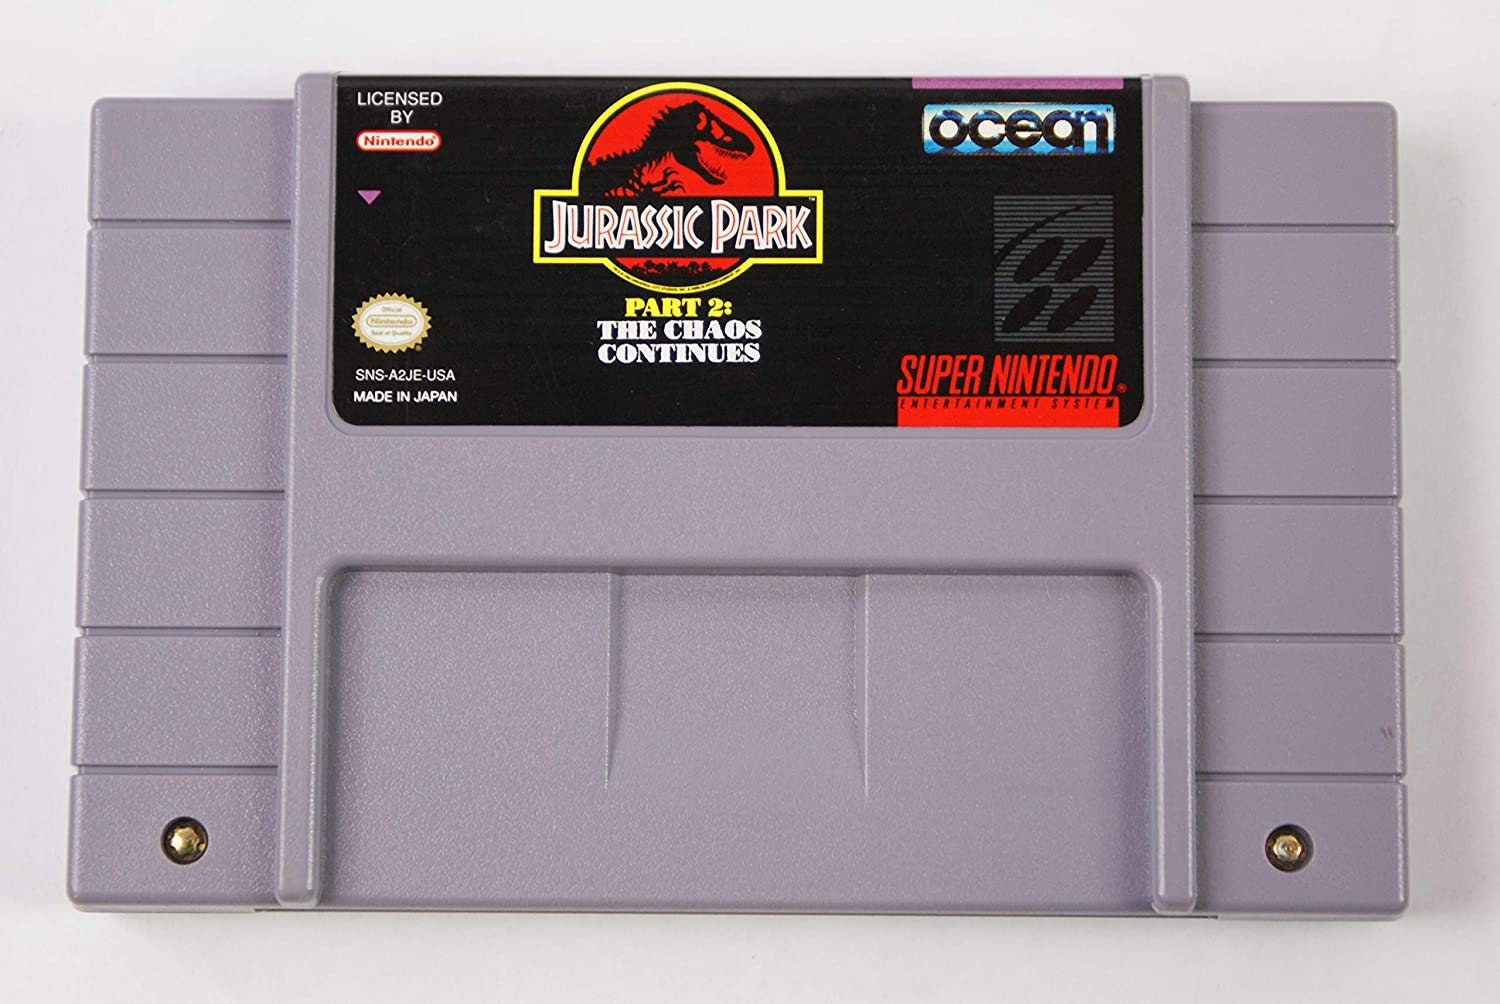 Jurassic Park Classic Games Collection llegará a consolas en 2023 16